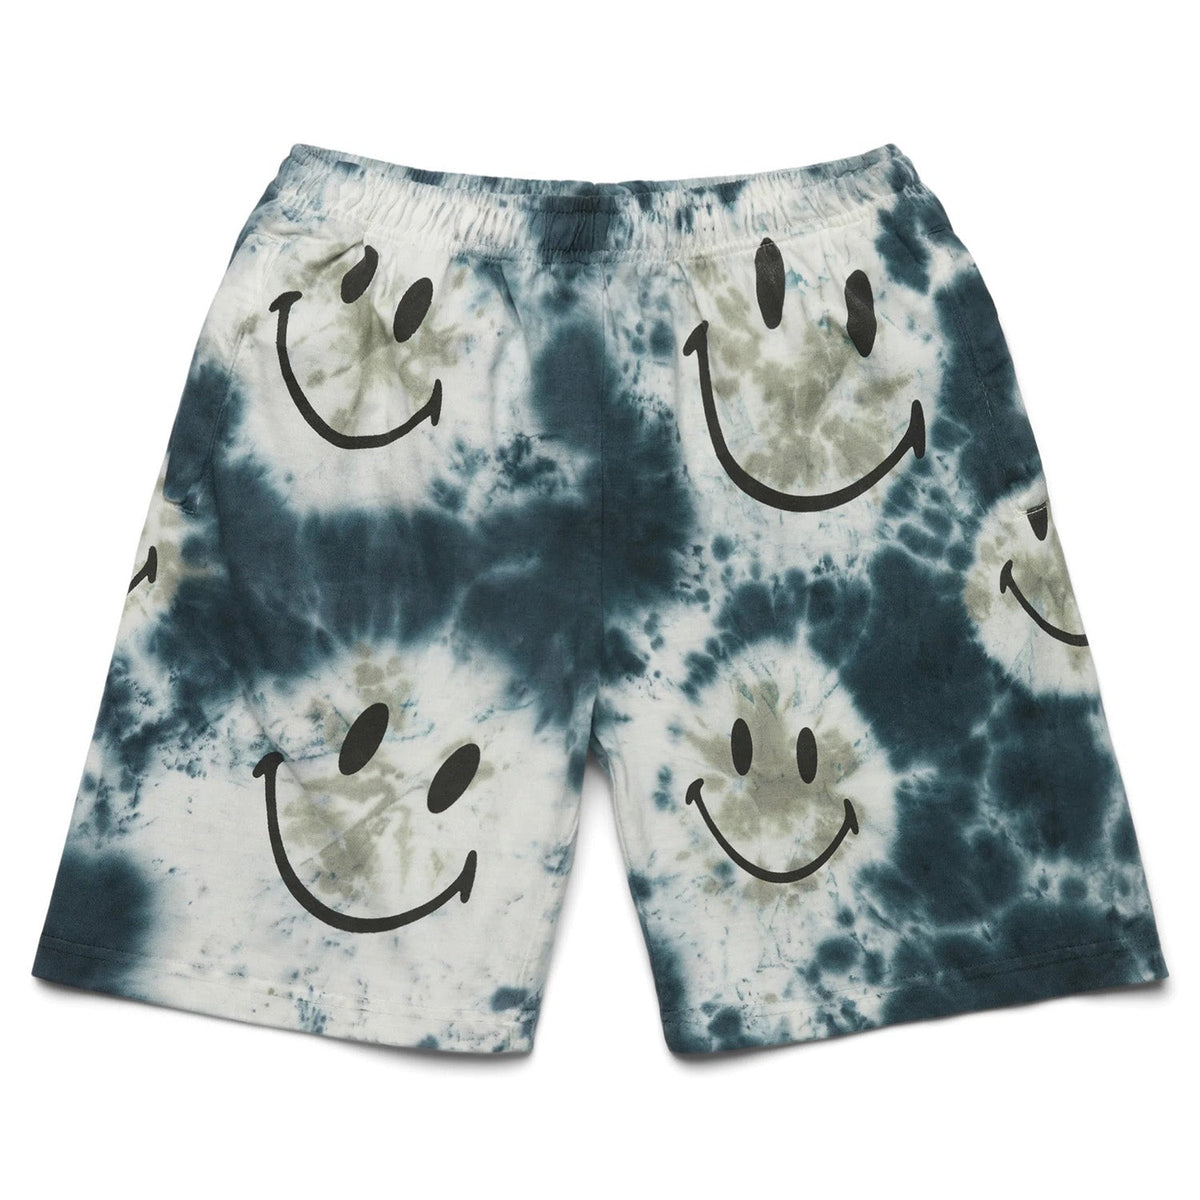 Market Men Smiley Shibori Dye Shorts Black - SHORTS - Canada